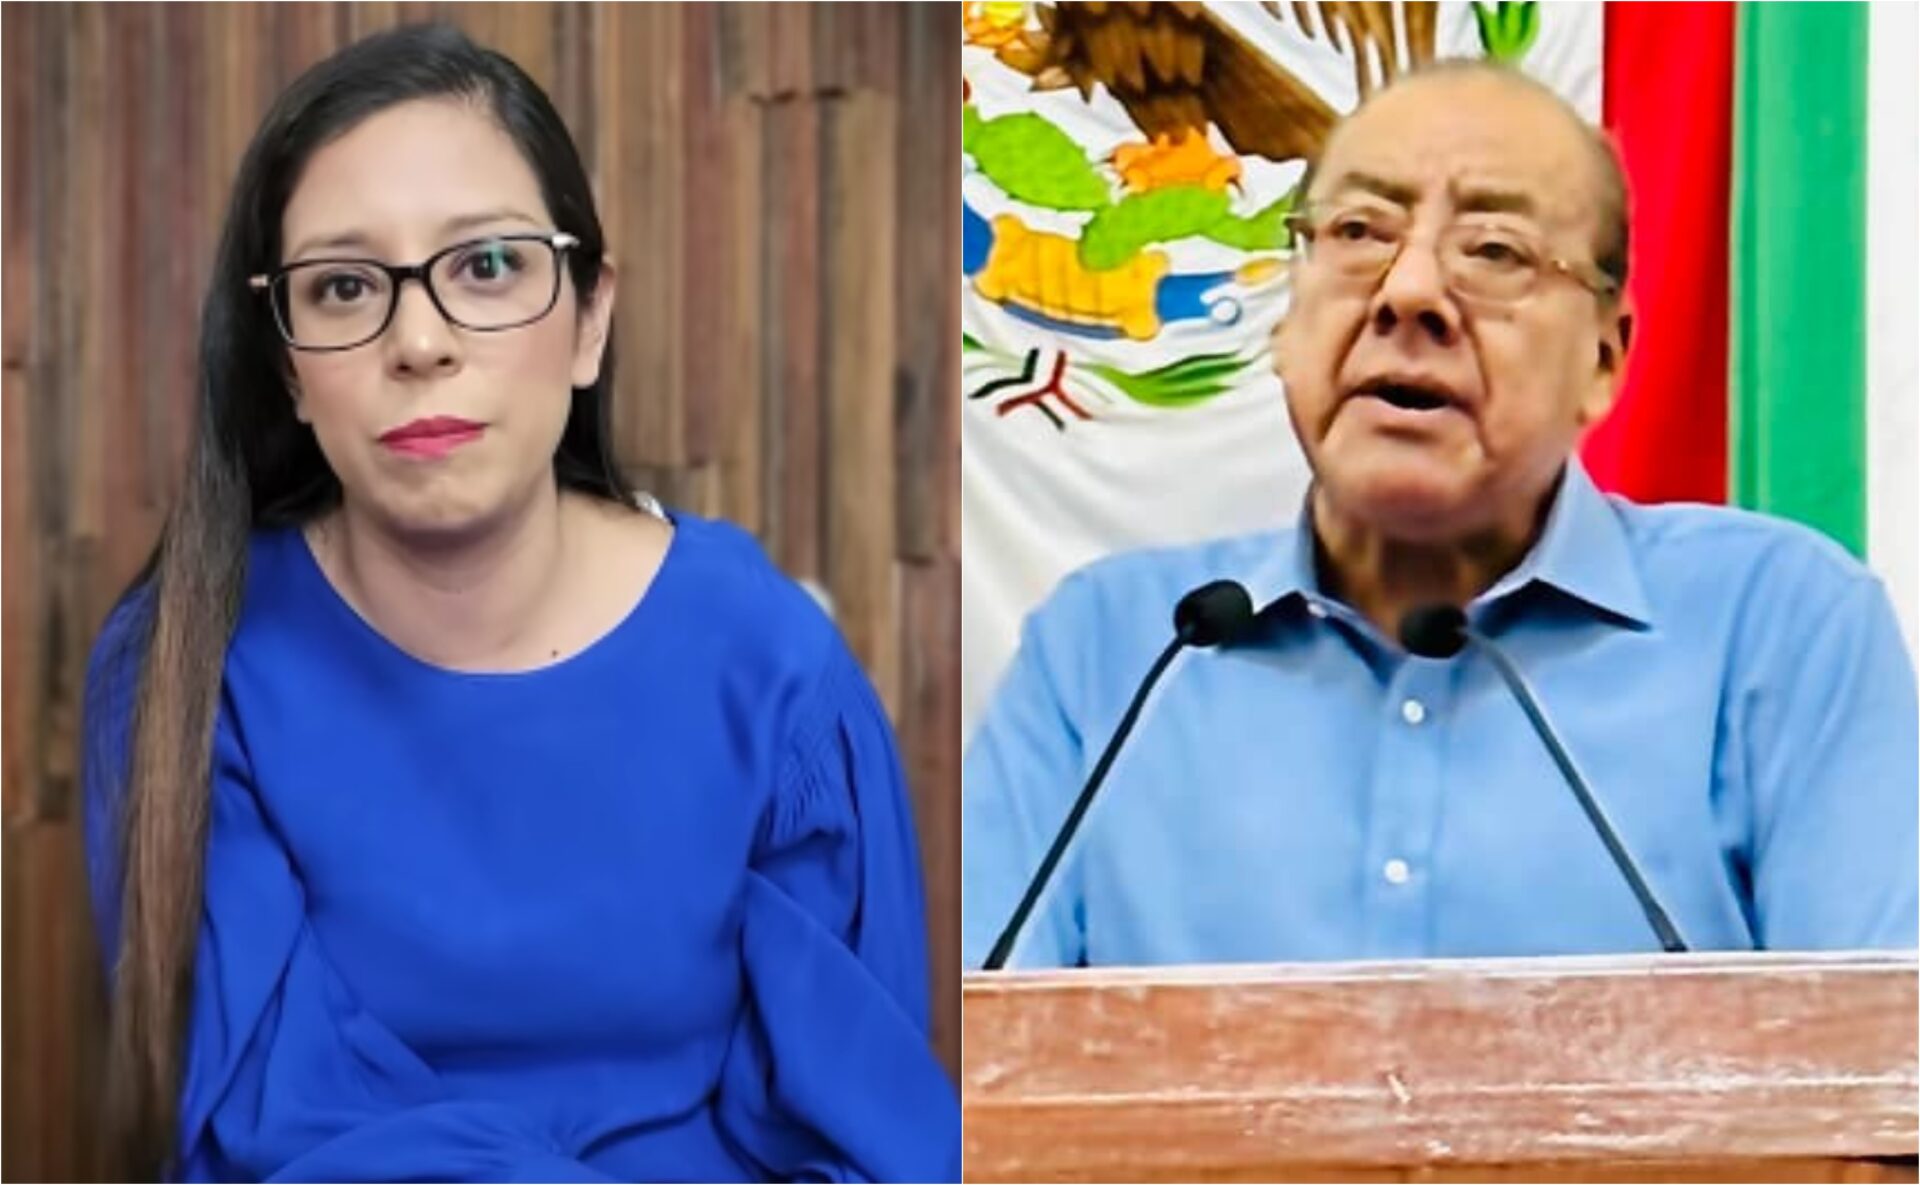 La diputada Luisa Gutiérrez acusa al morenista Nazario Norberto de abuso sexual